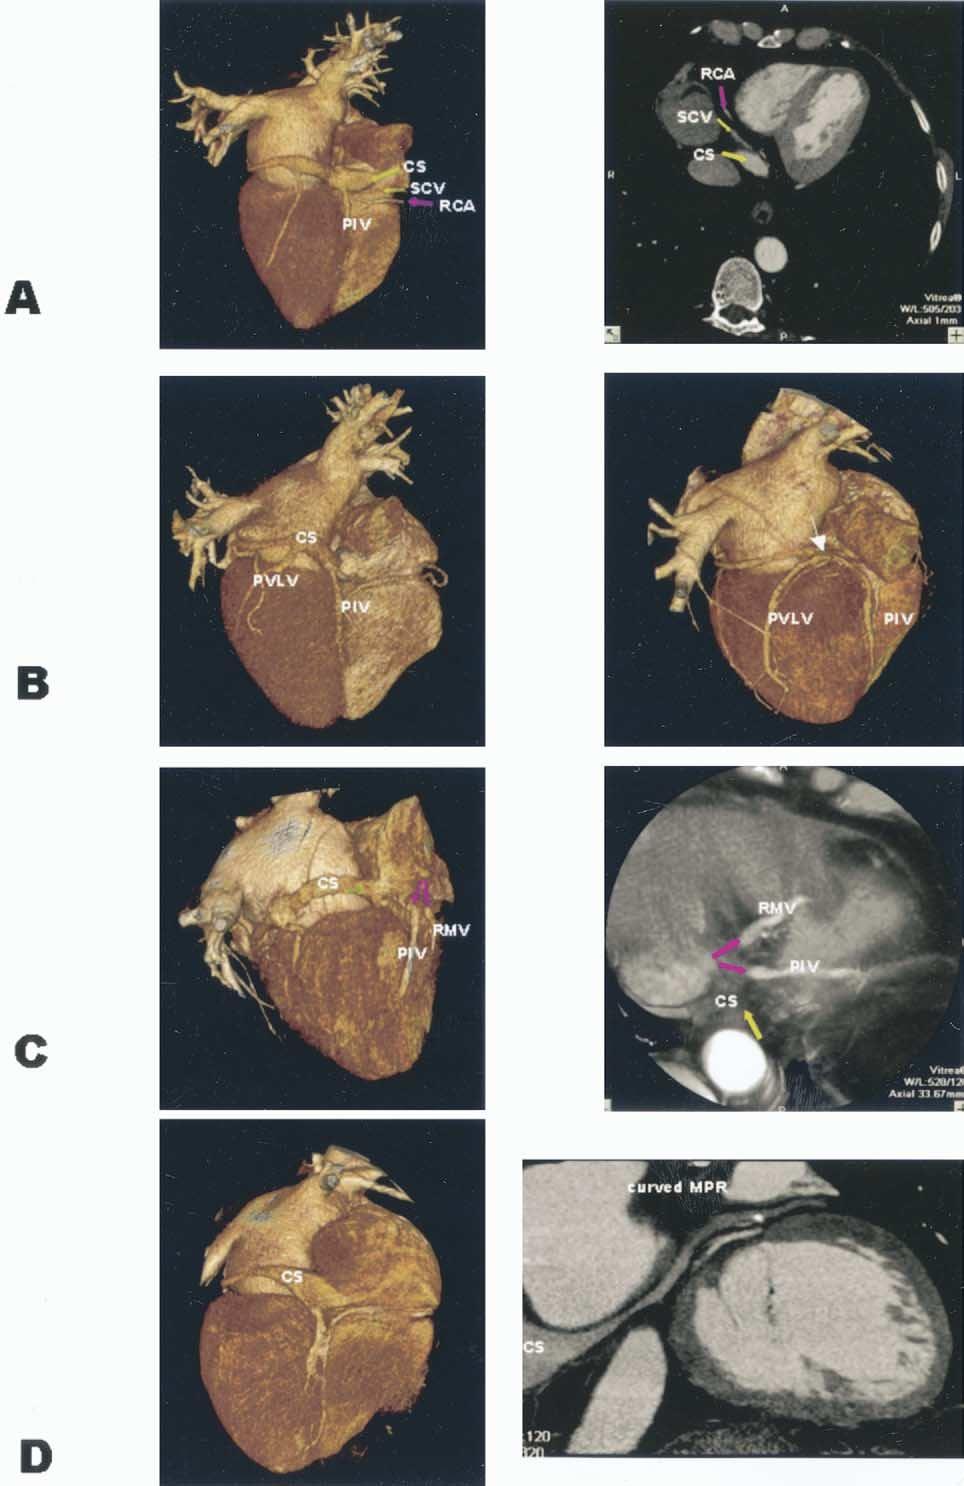 752 Jongbloed et al. JACC Vol. 45, No. 5, 2005 CT Imaging of the Cardiac Venous System March 1, 2005:749 53 Figure 2. (A) Variant 1. Left volume-rendered reconstruction.